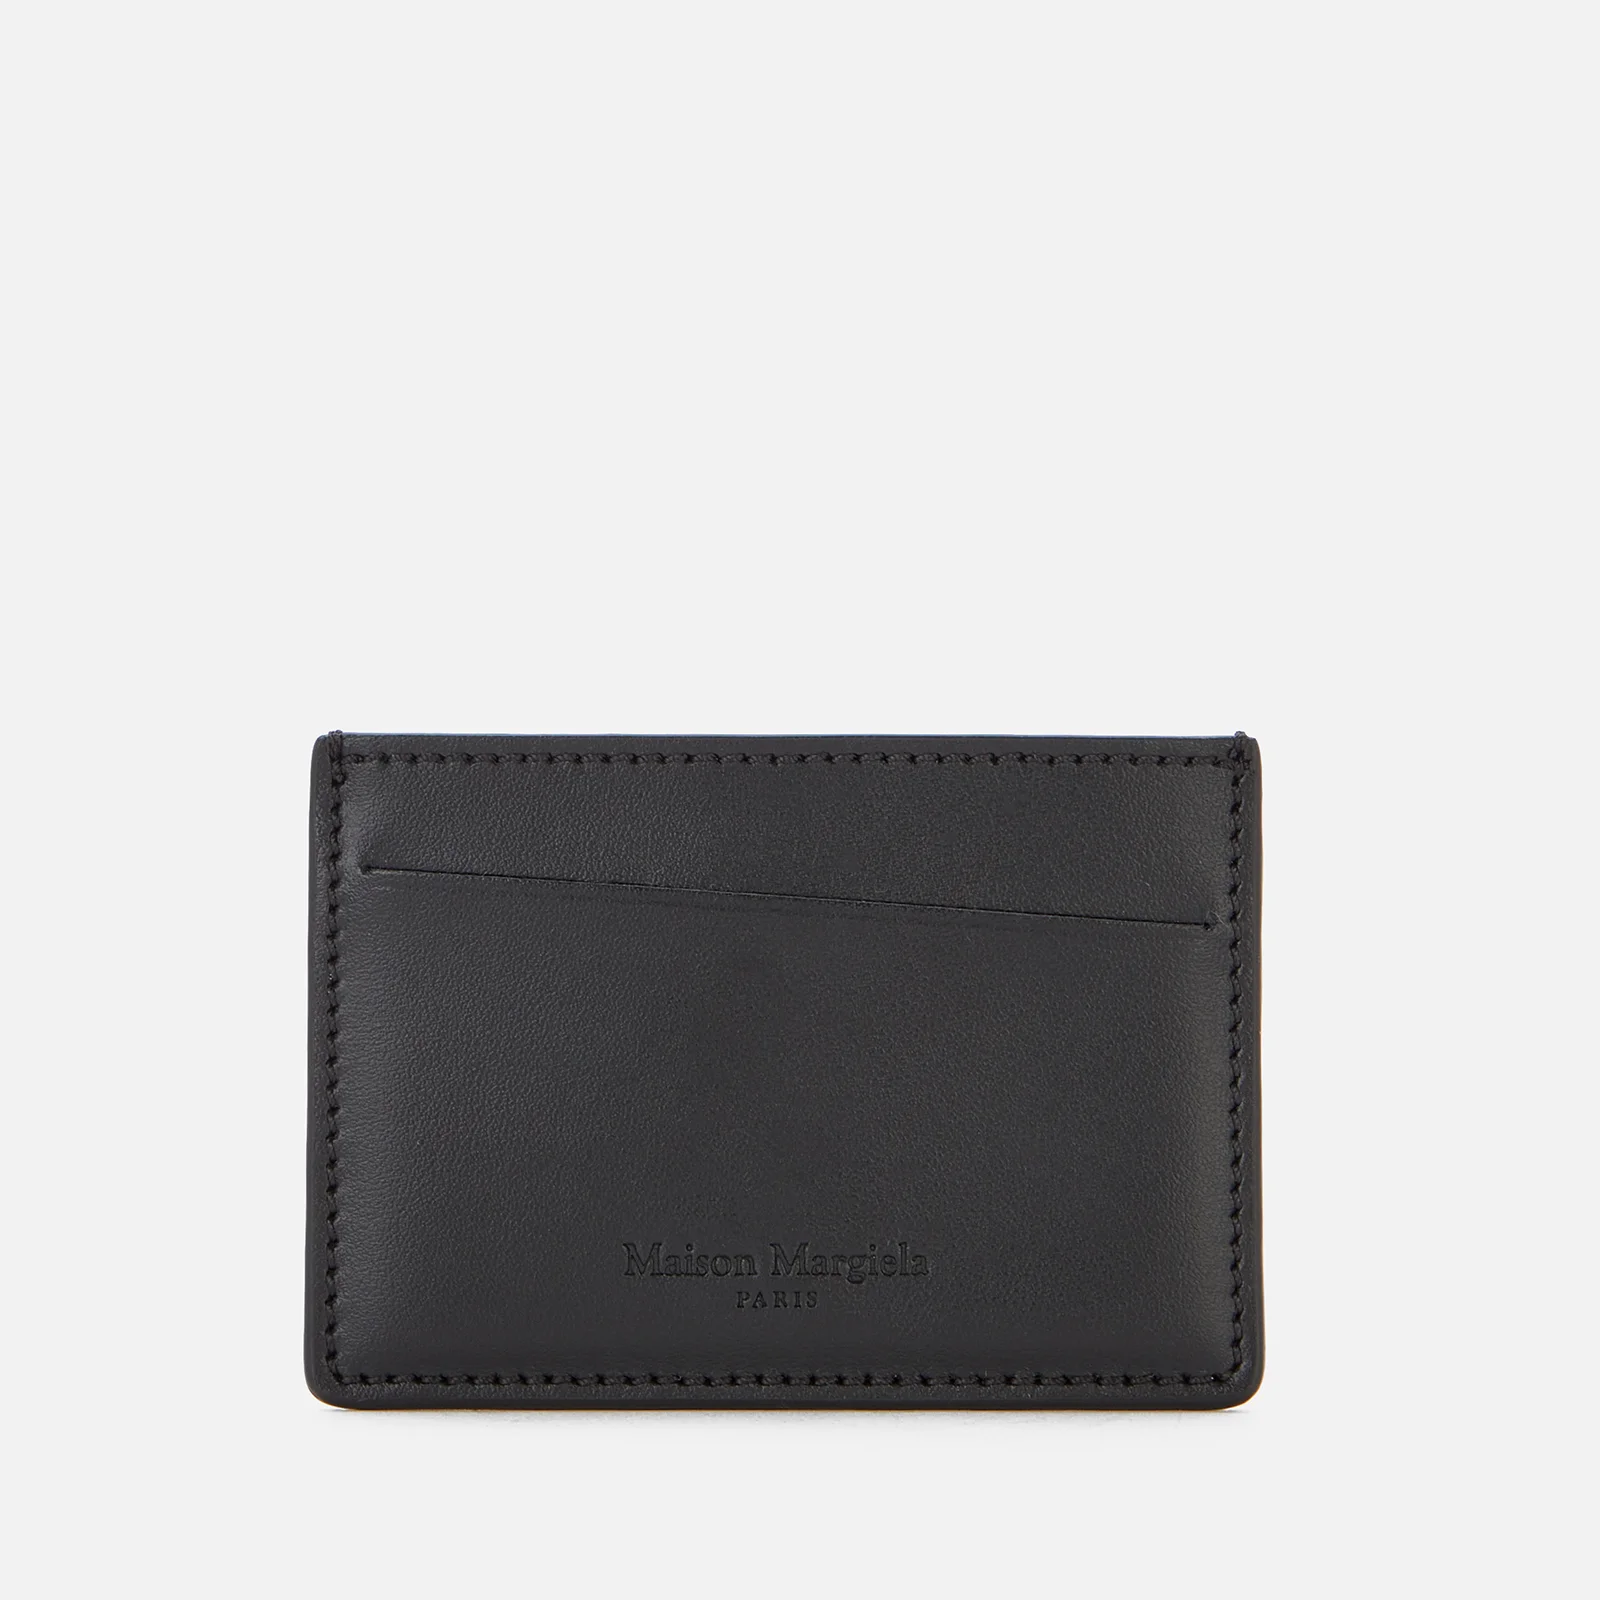 Maison Margiela Men's 3 Card Credit Card Case - Black Image 1